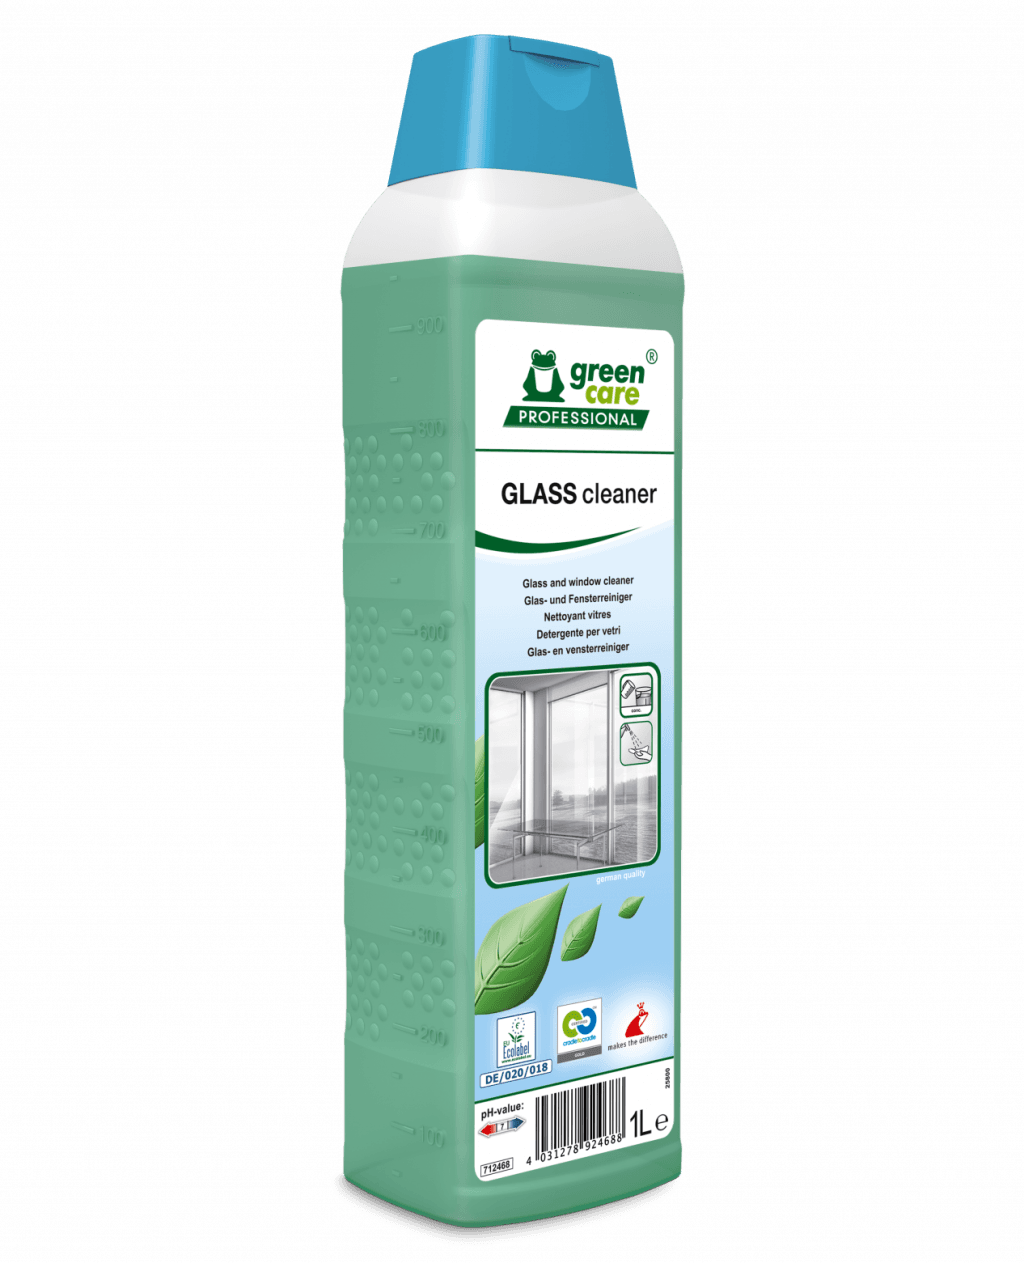 Tana Green Care Glass Cleaner 10 x 1 liter